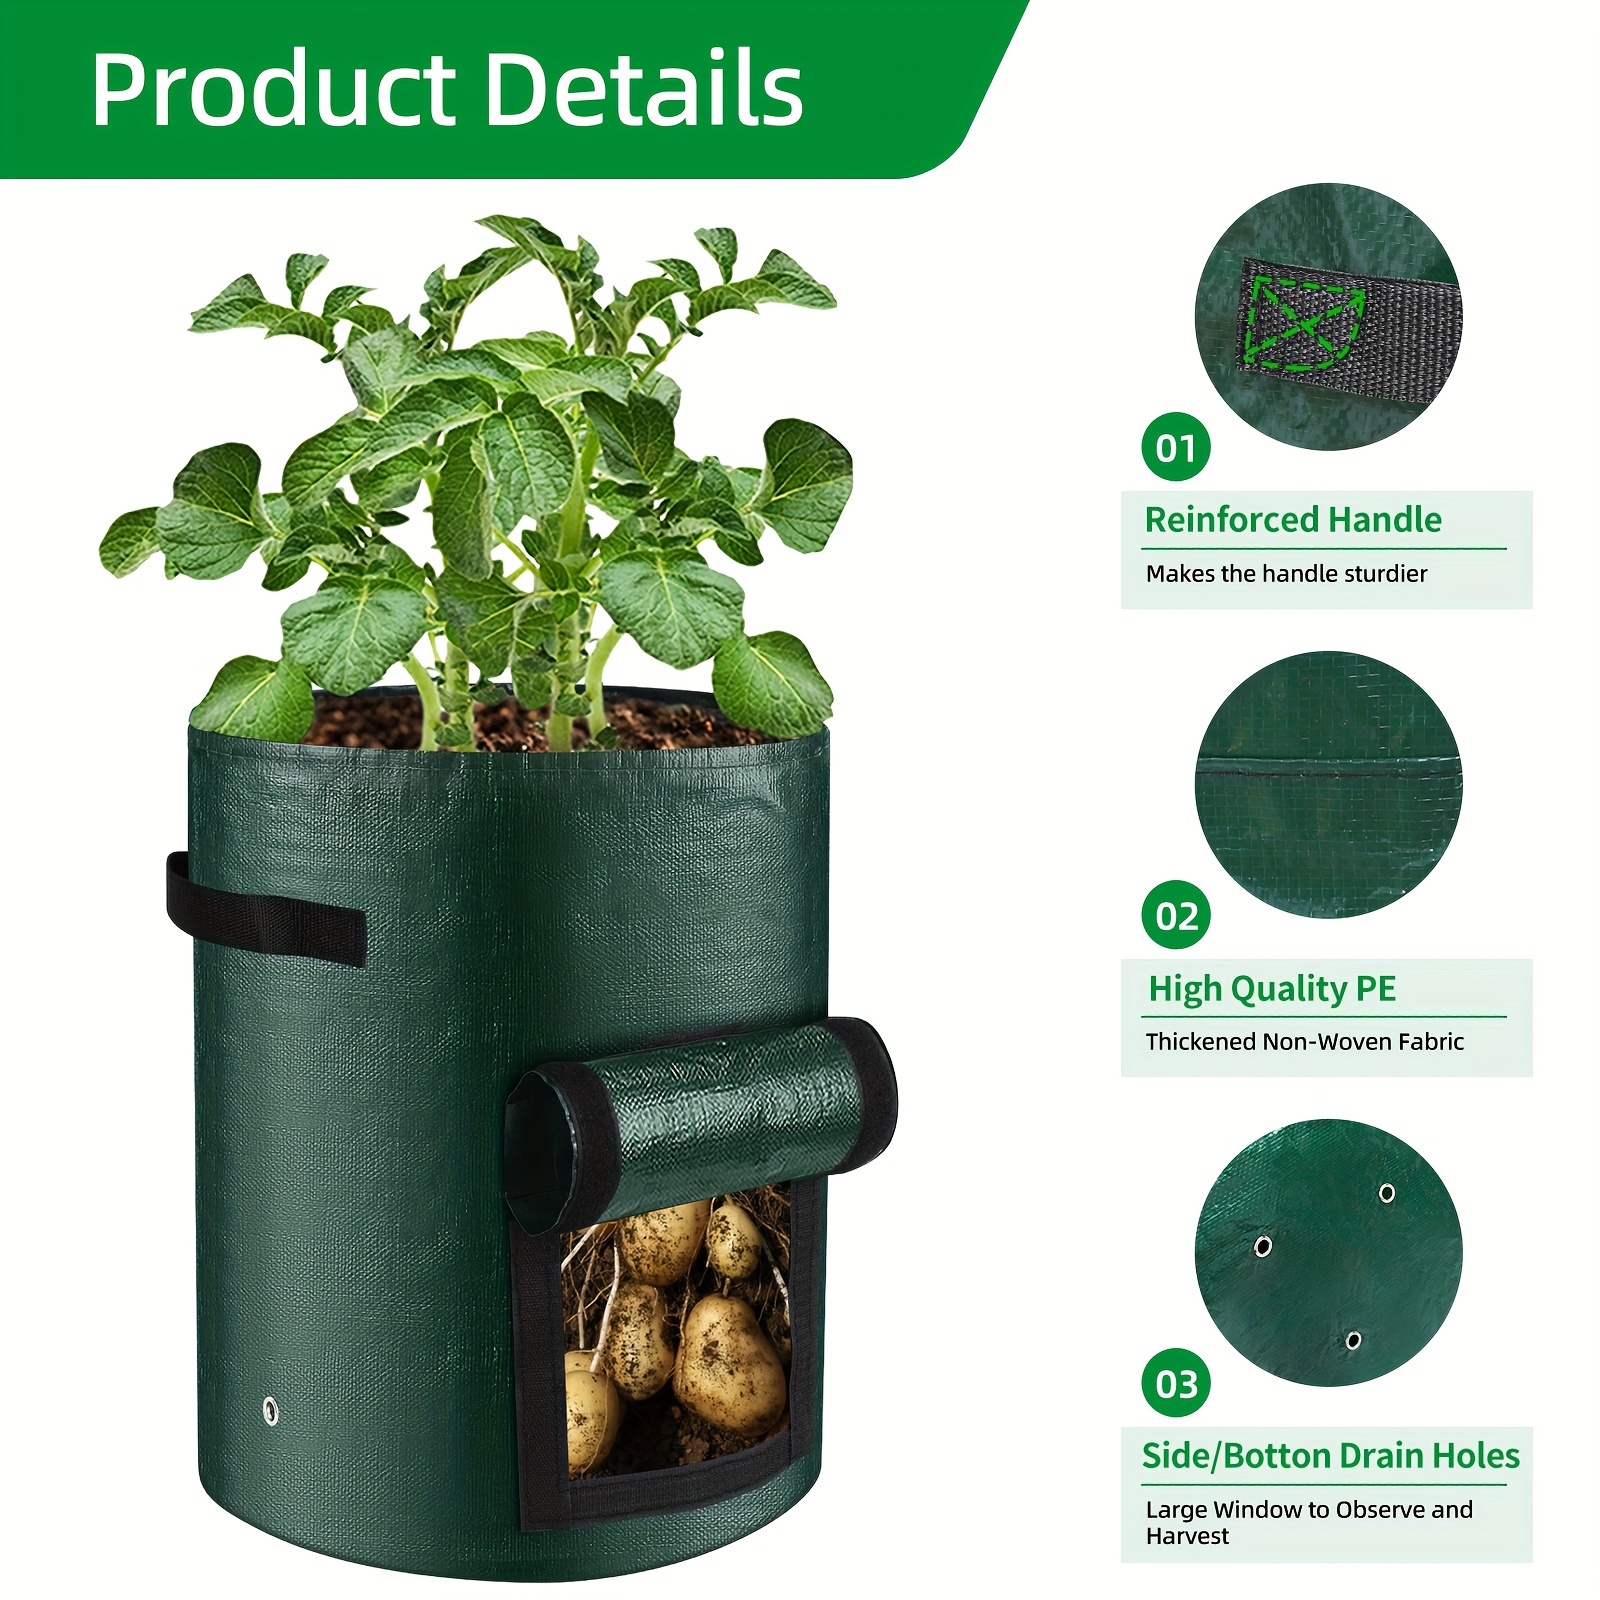 Homyhoo Potato Grow Bags with Flap 10 Gallon, 4 Pack Planter Pot